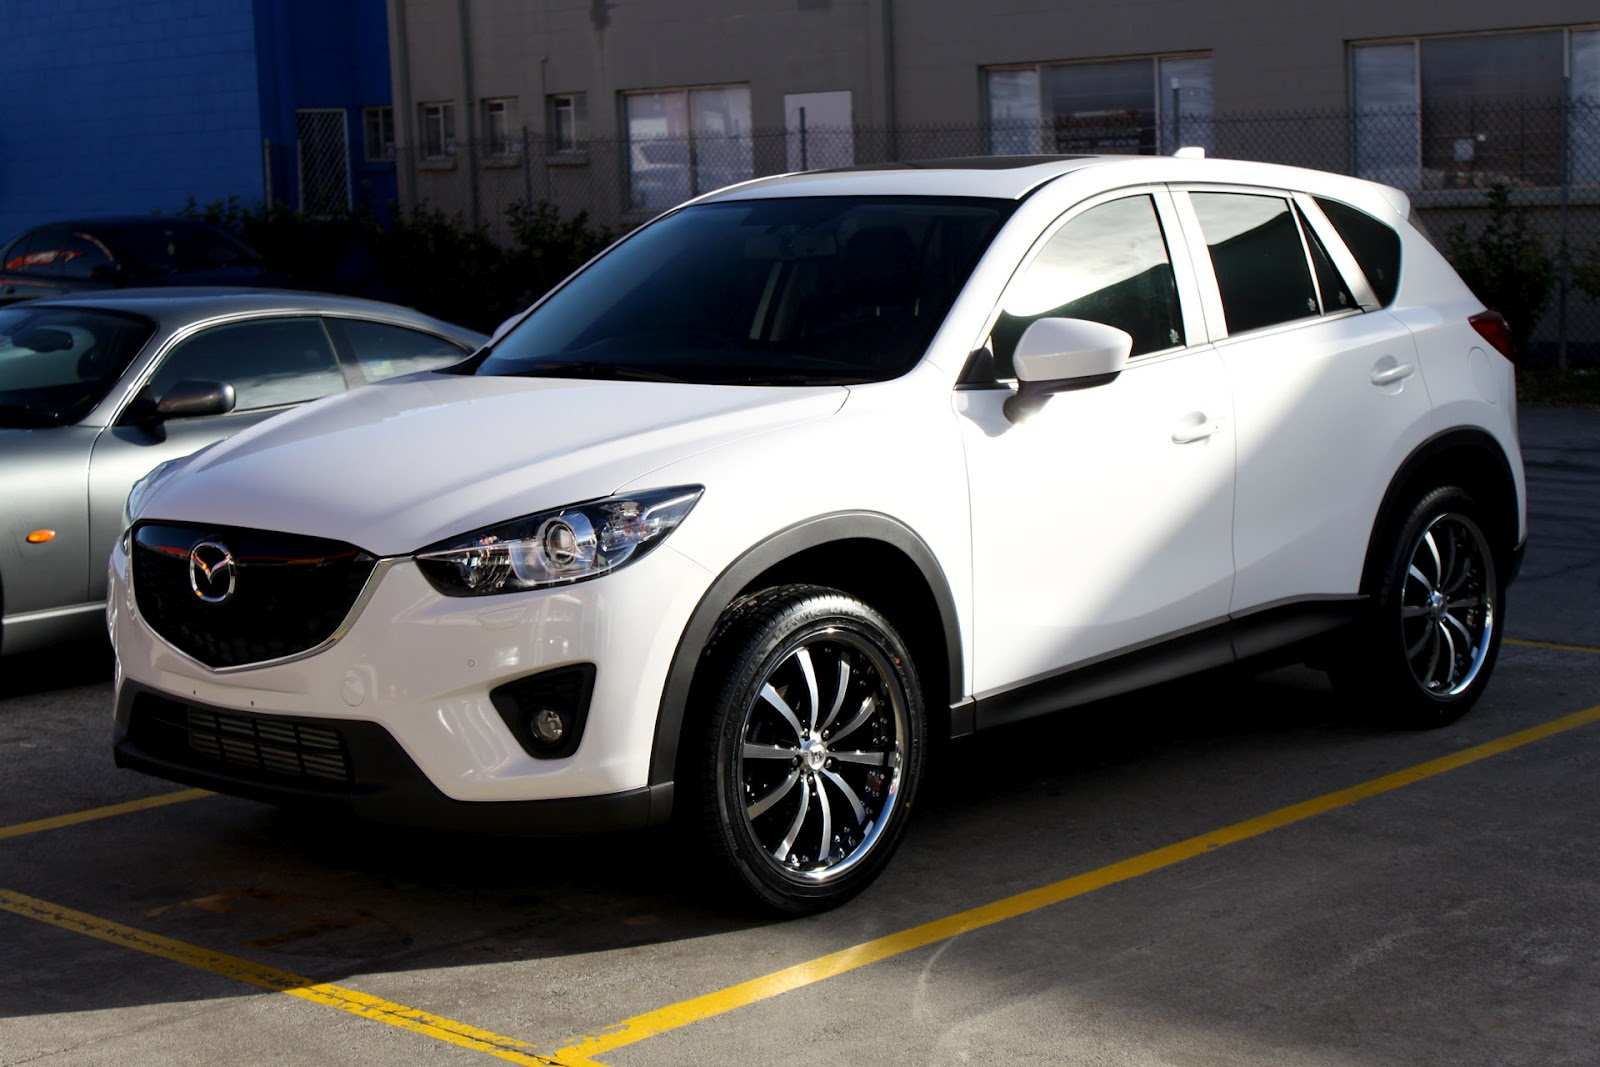 Мазда сх5 2014г. Mazda CX 5 White. Mazda CX 5 белая. Mazda CX-5 2015 белый. Мазда СХ-5 белая 2014.